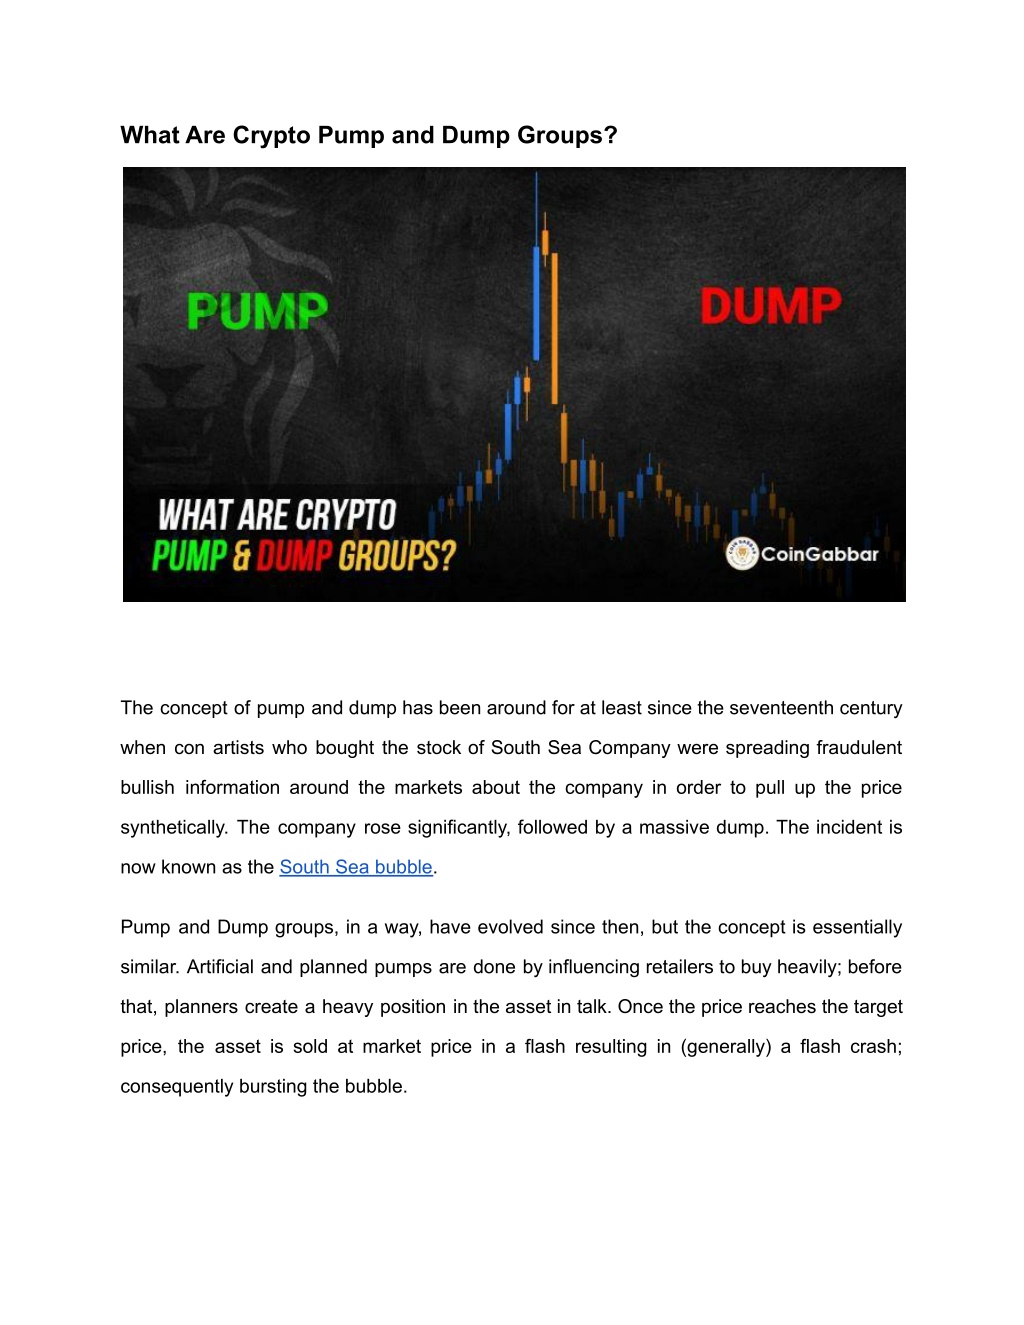 Pump and dump crypto groups slr price crypto